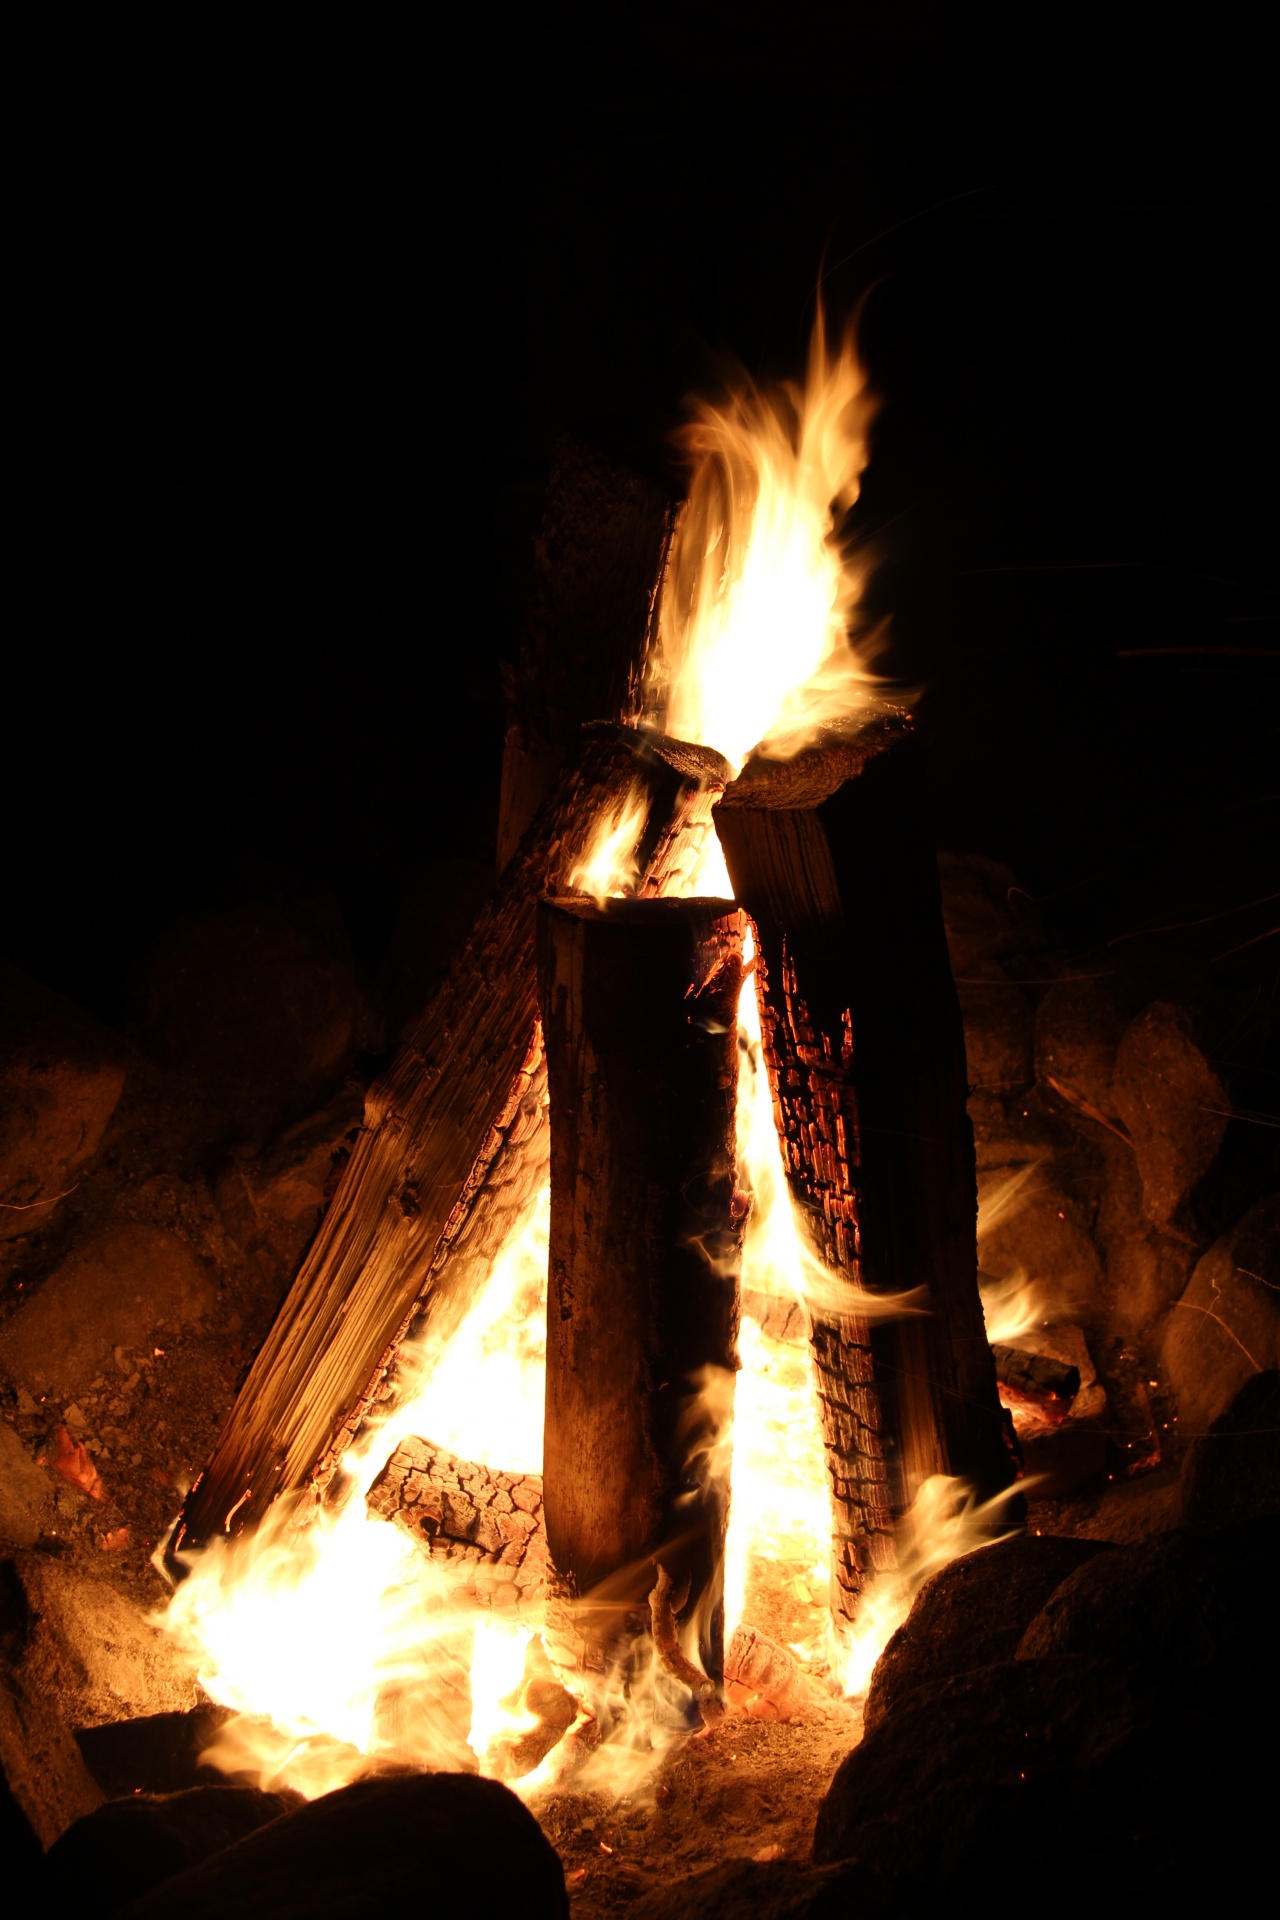 A late night campfire